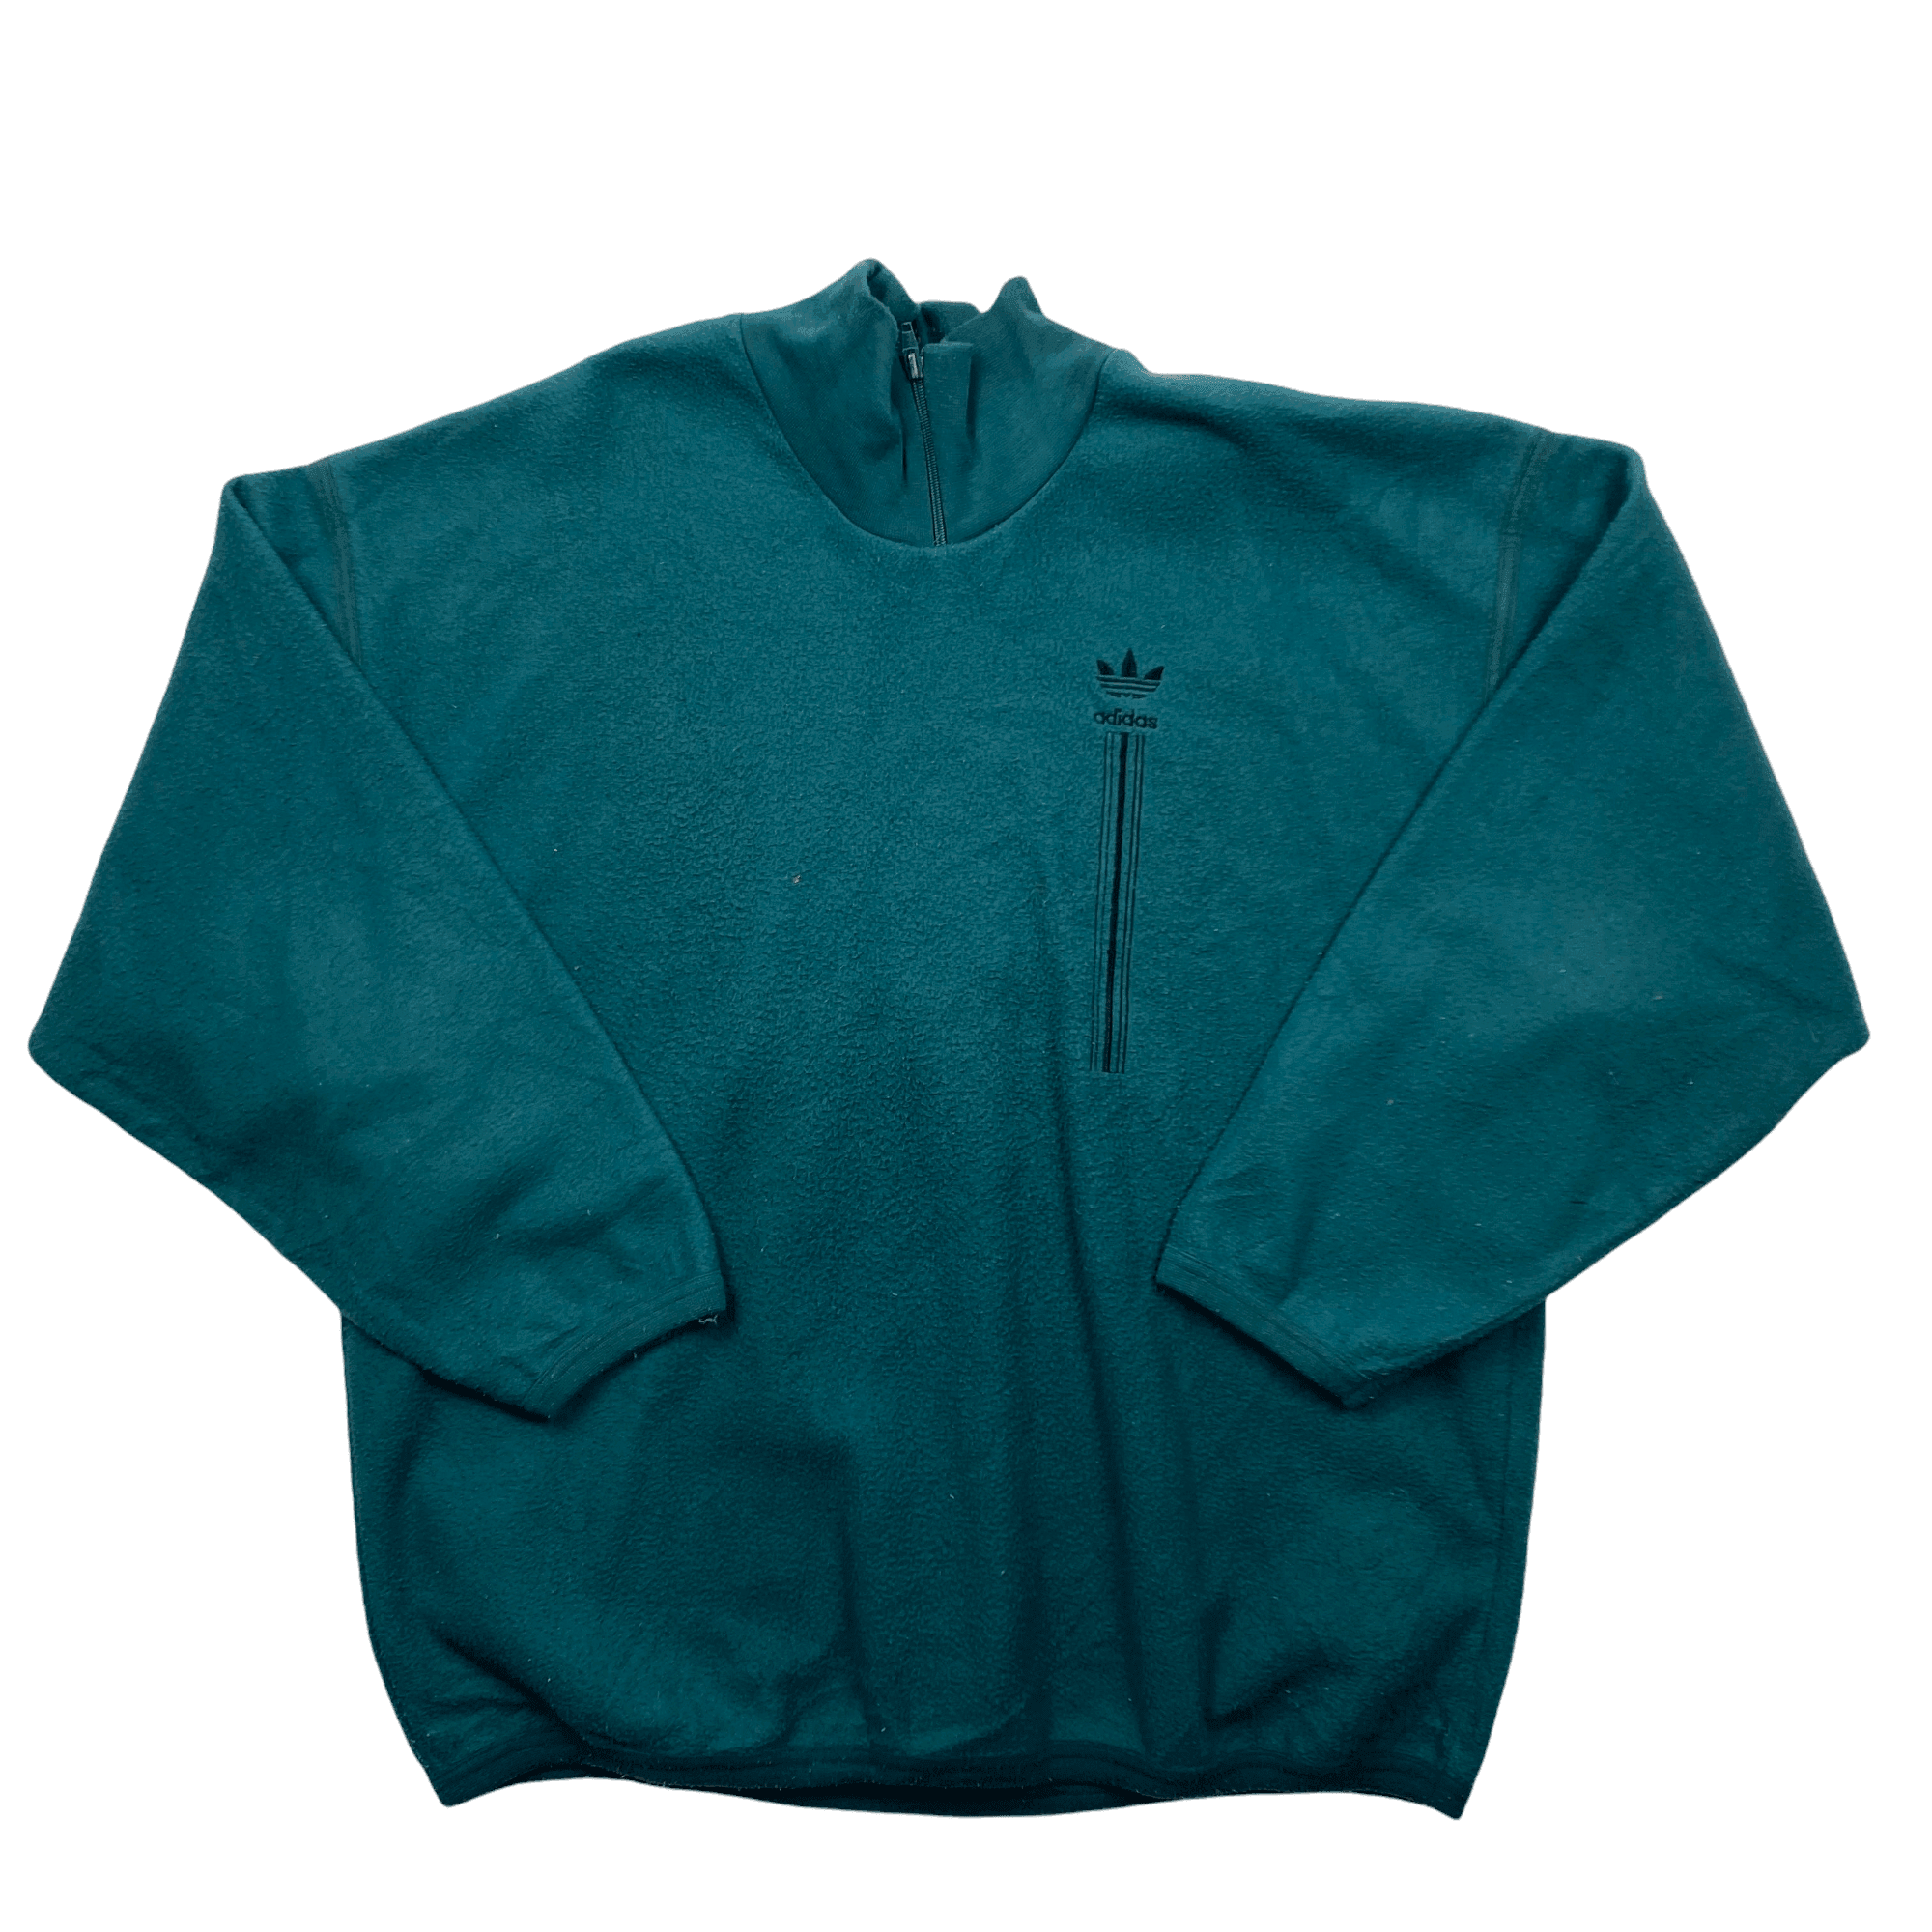 Vintage 90s Green/ Blue Adidas Spell-Out Fleece Sweatshirt - Extra Large - The Streetwear Studio